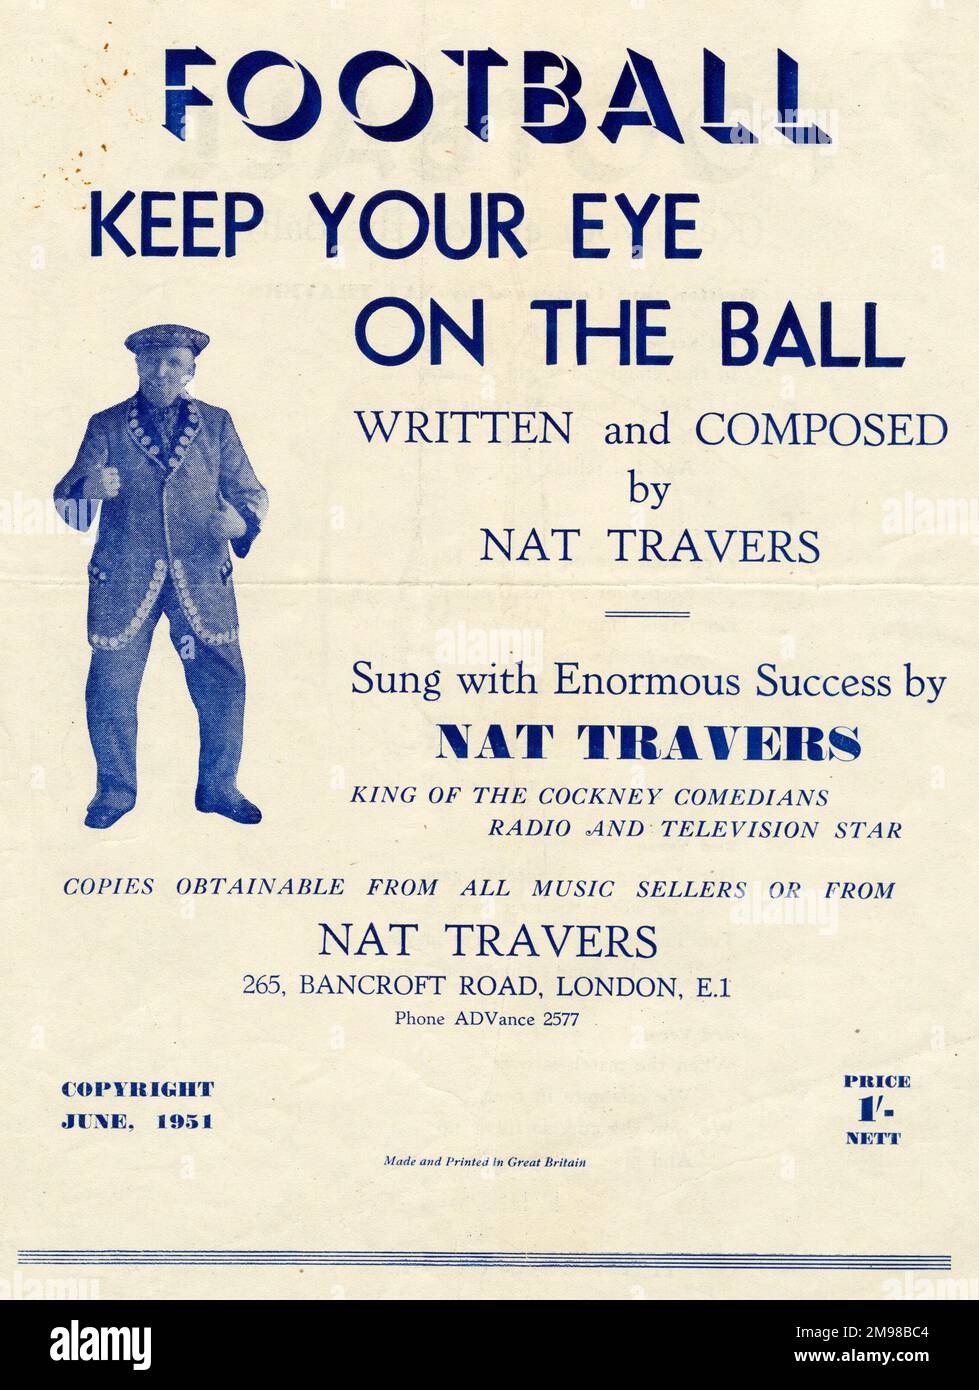 Copertina musicale, Football, Keep Your Eye on the Ball, scritta, composta ed eseguita da Nat Travers, King of the Cockney Comedians, radio e star televisiva. Foto Stock